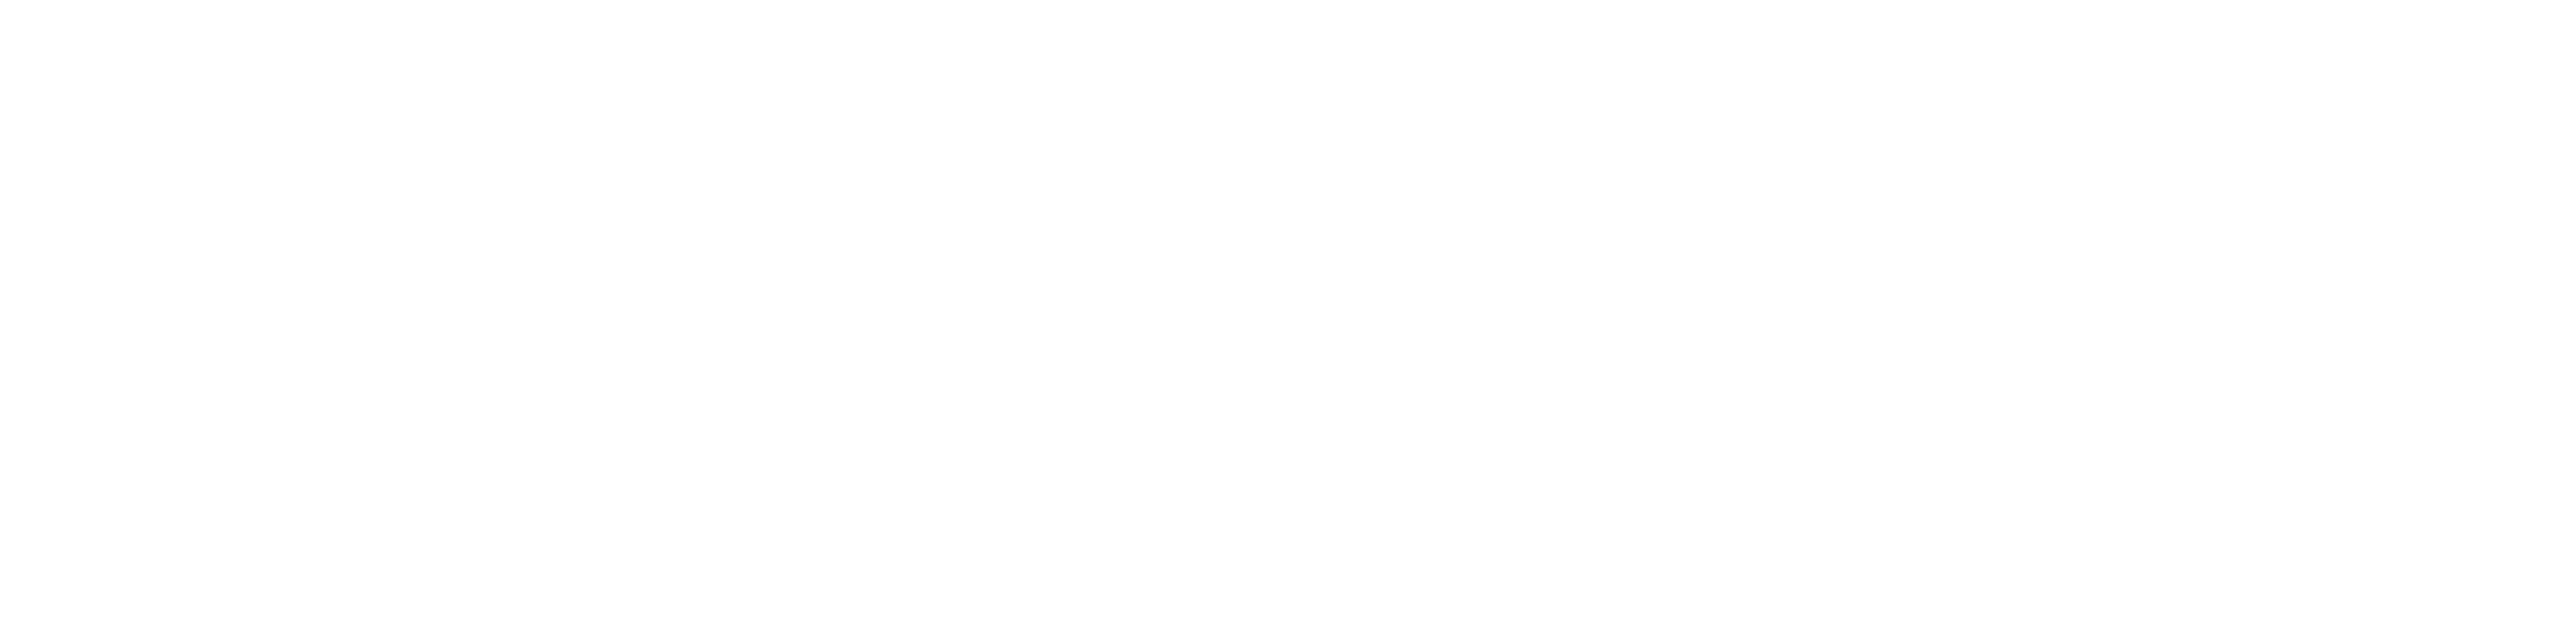 10 Anos Mega Forte – Orby Marketing 360º